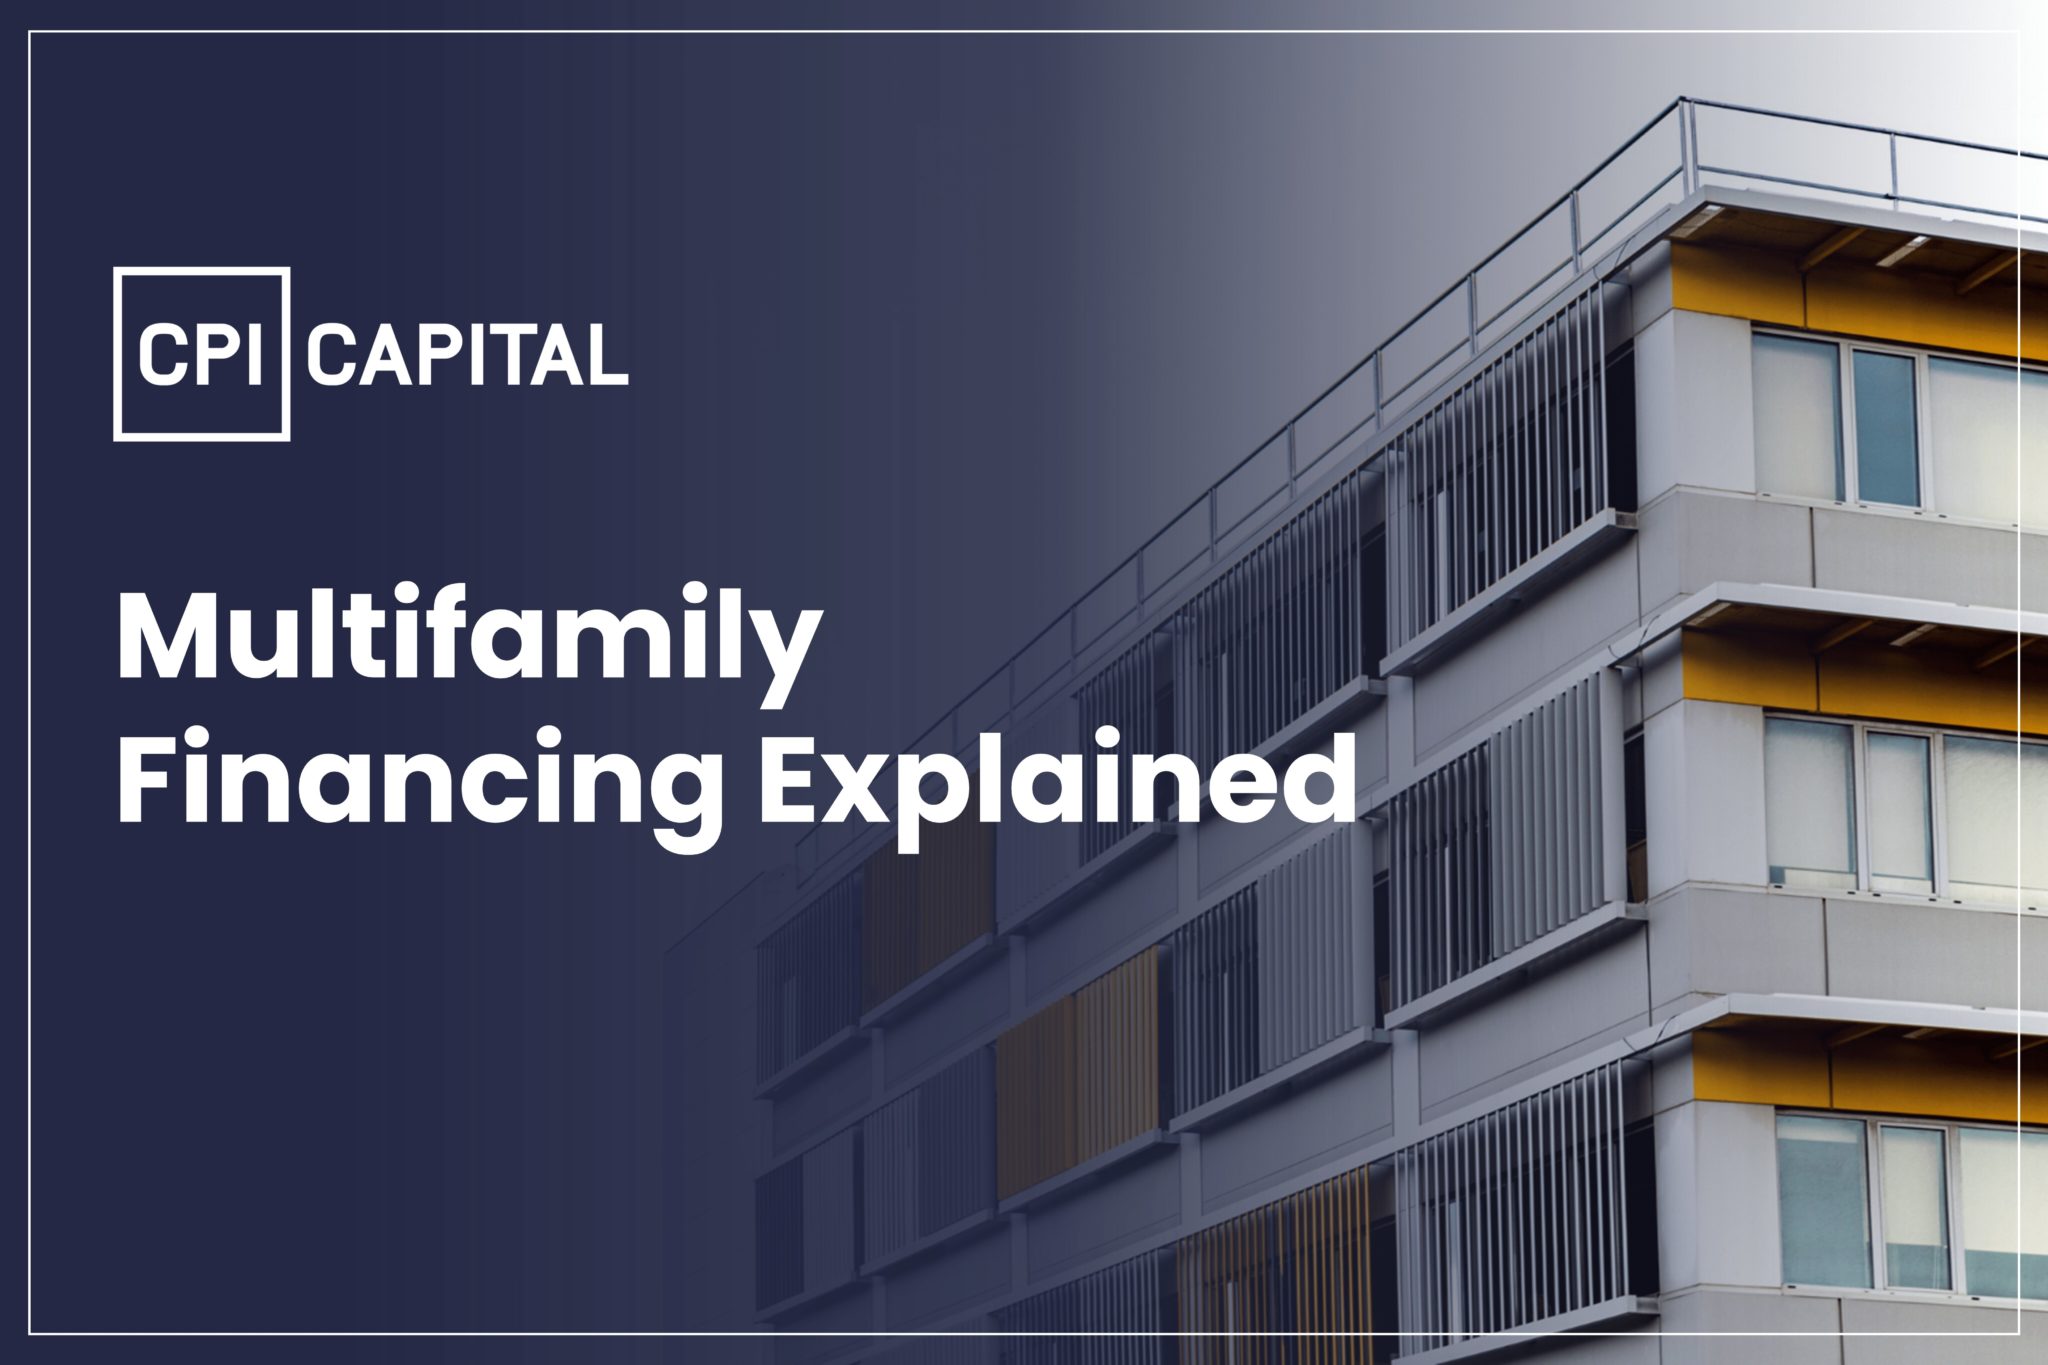 Multi-family financing explained